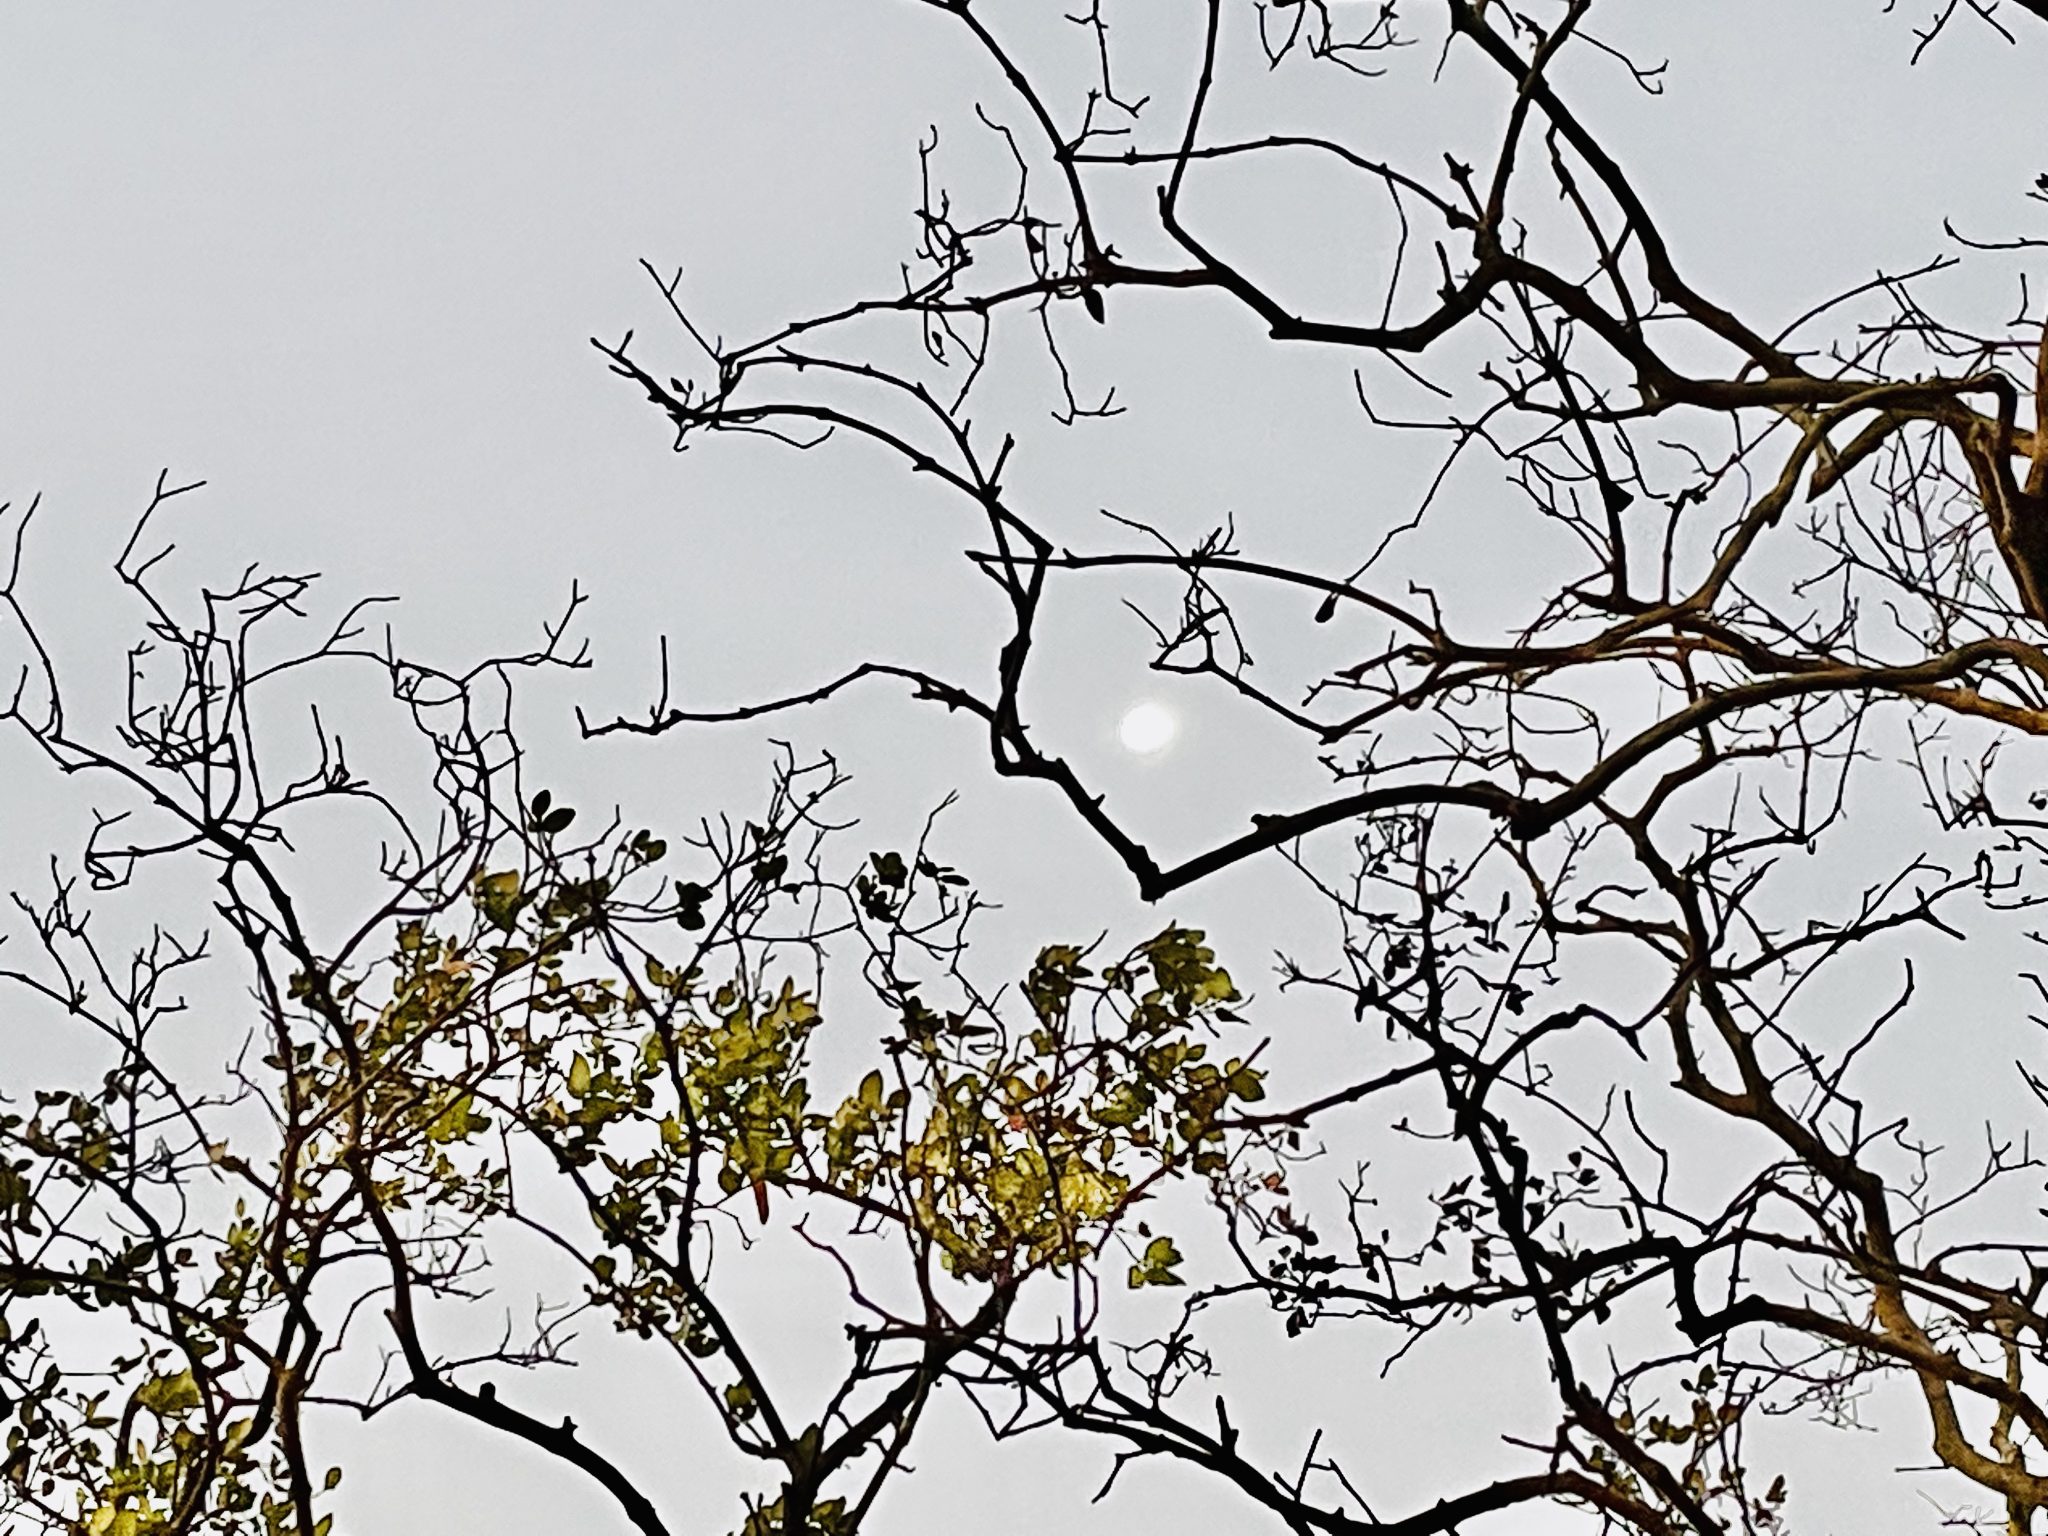 Moon & mangrove branches. Kozhikode, Kerala, India